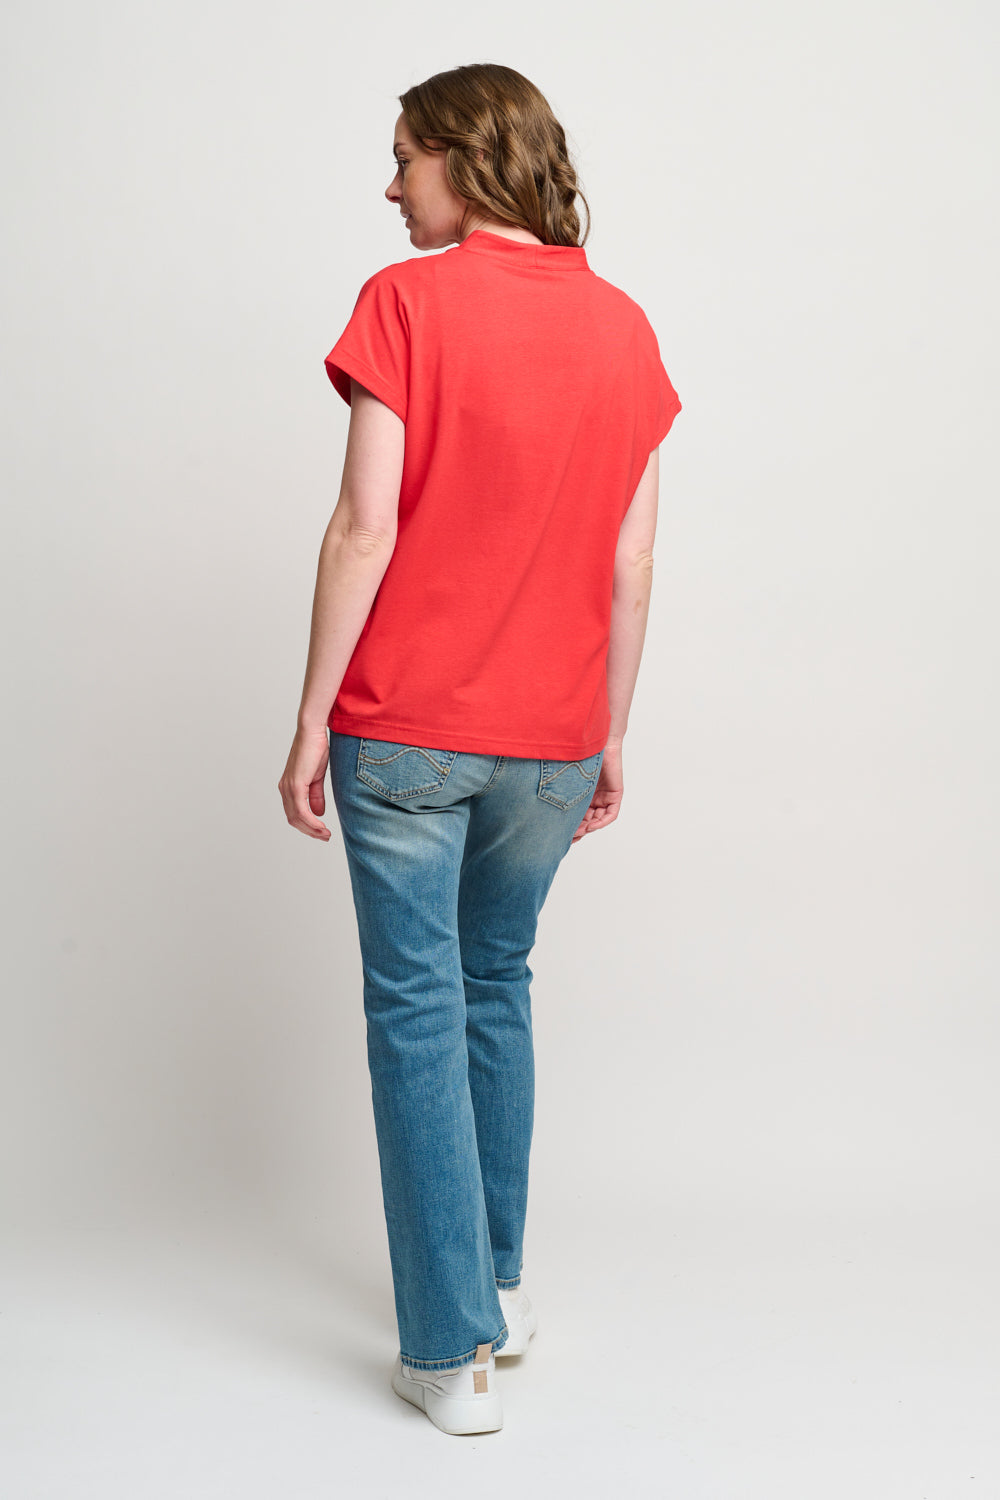 T-shirt - Poinsettia Red